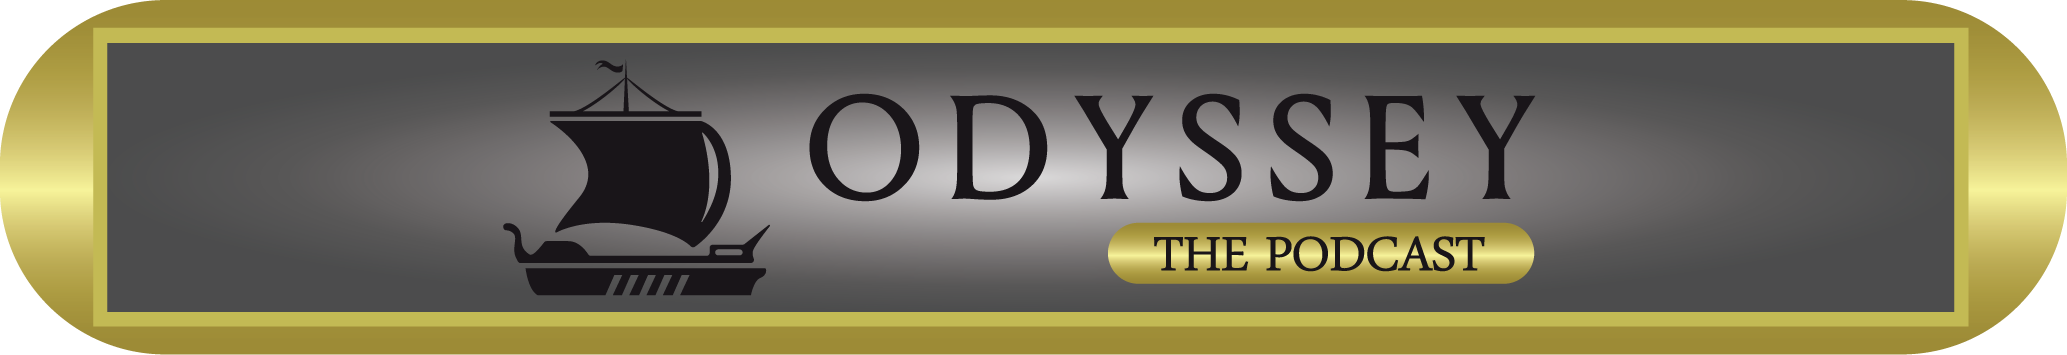 ODYSSEY:  THE PODCAST